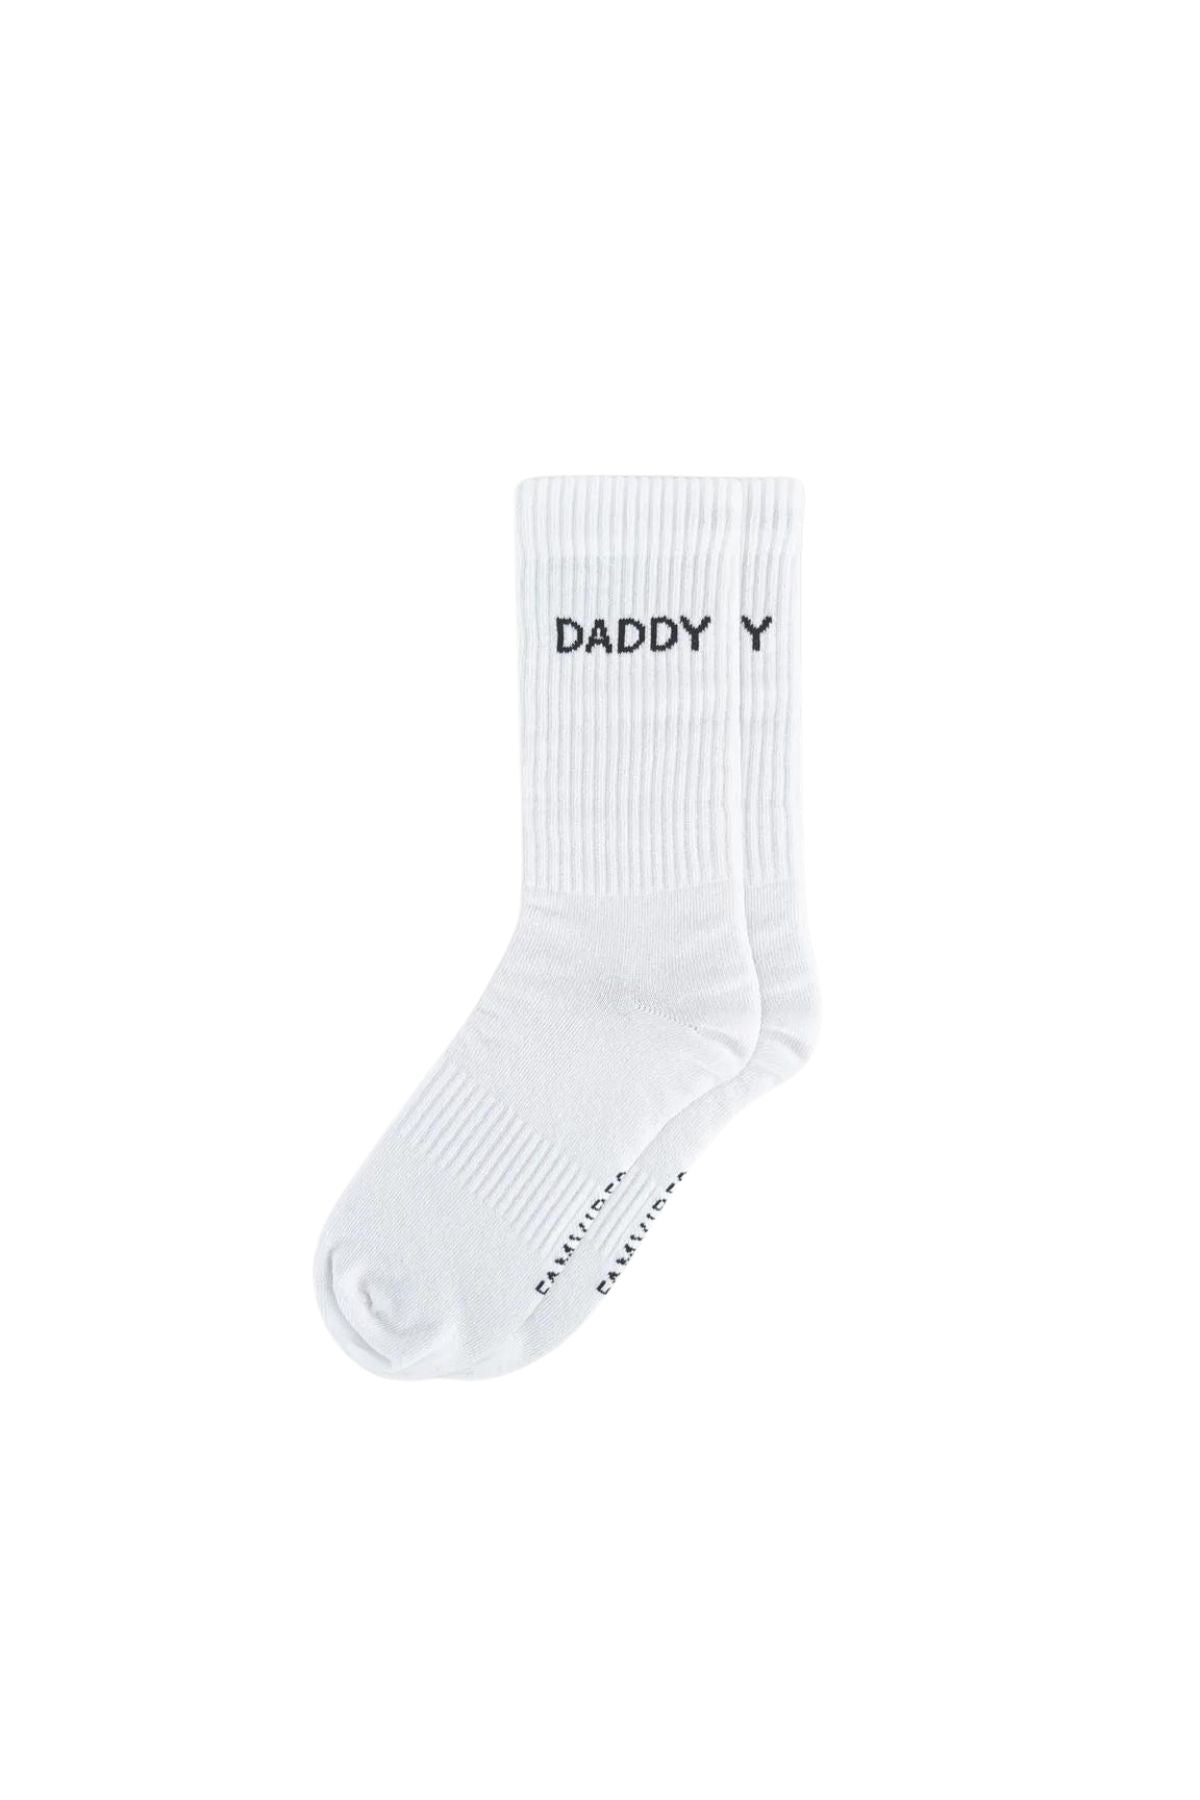 Socken "Daddy" - SYNCSON 